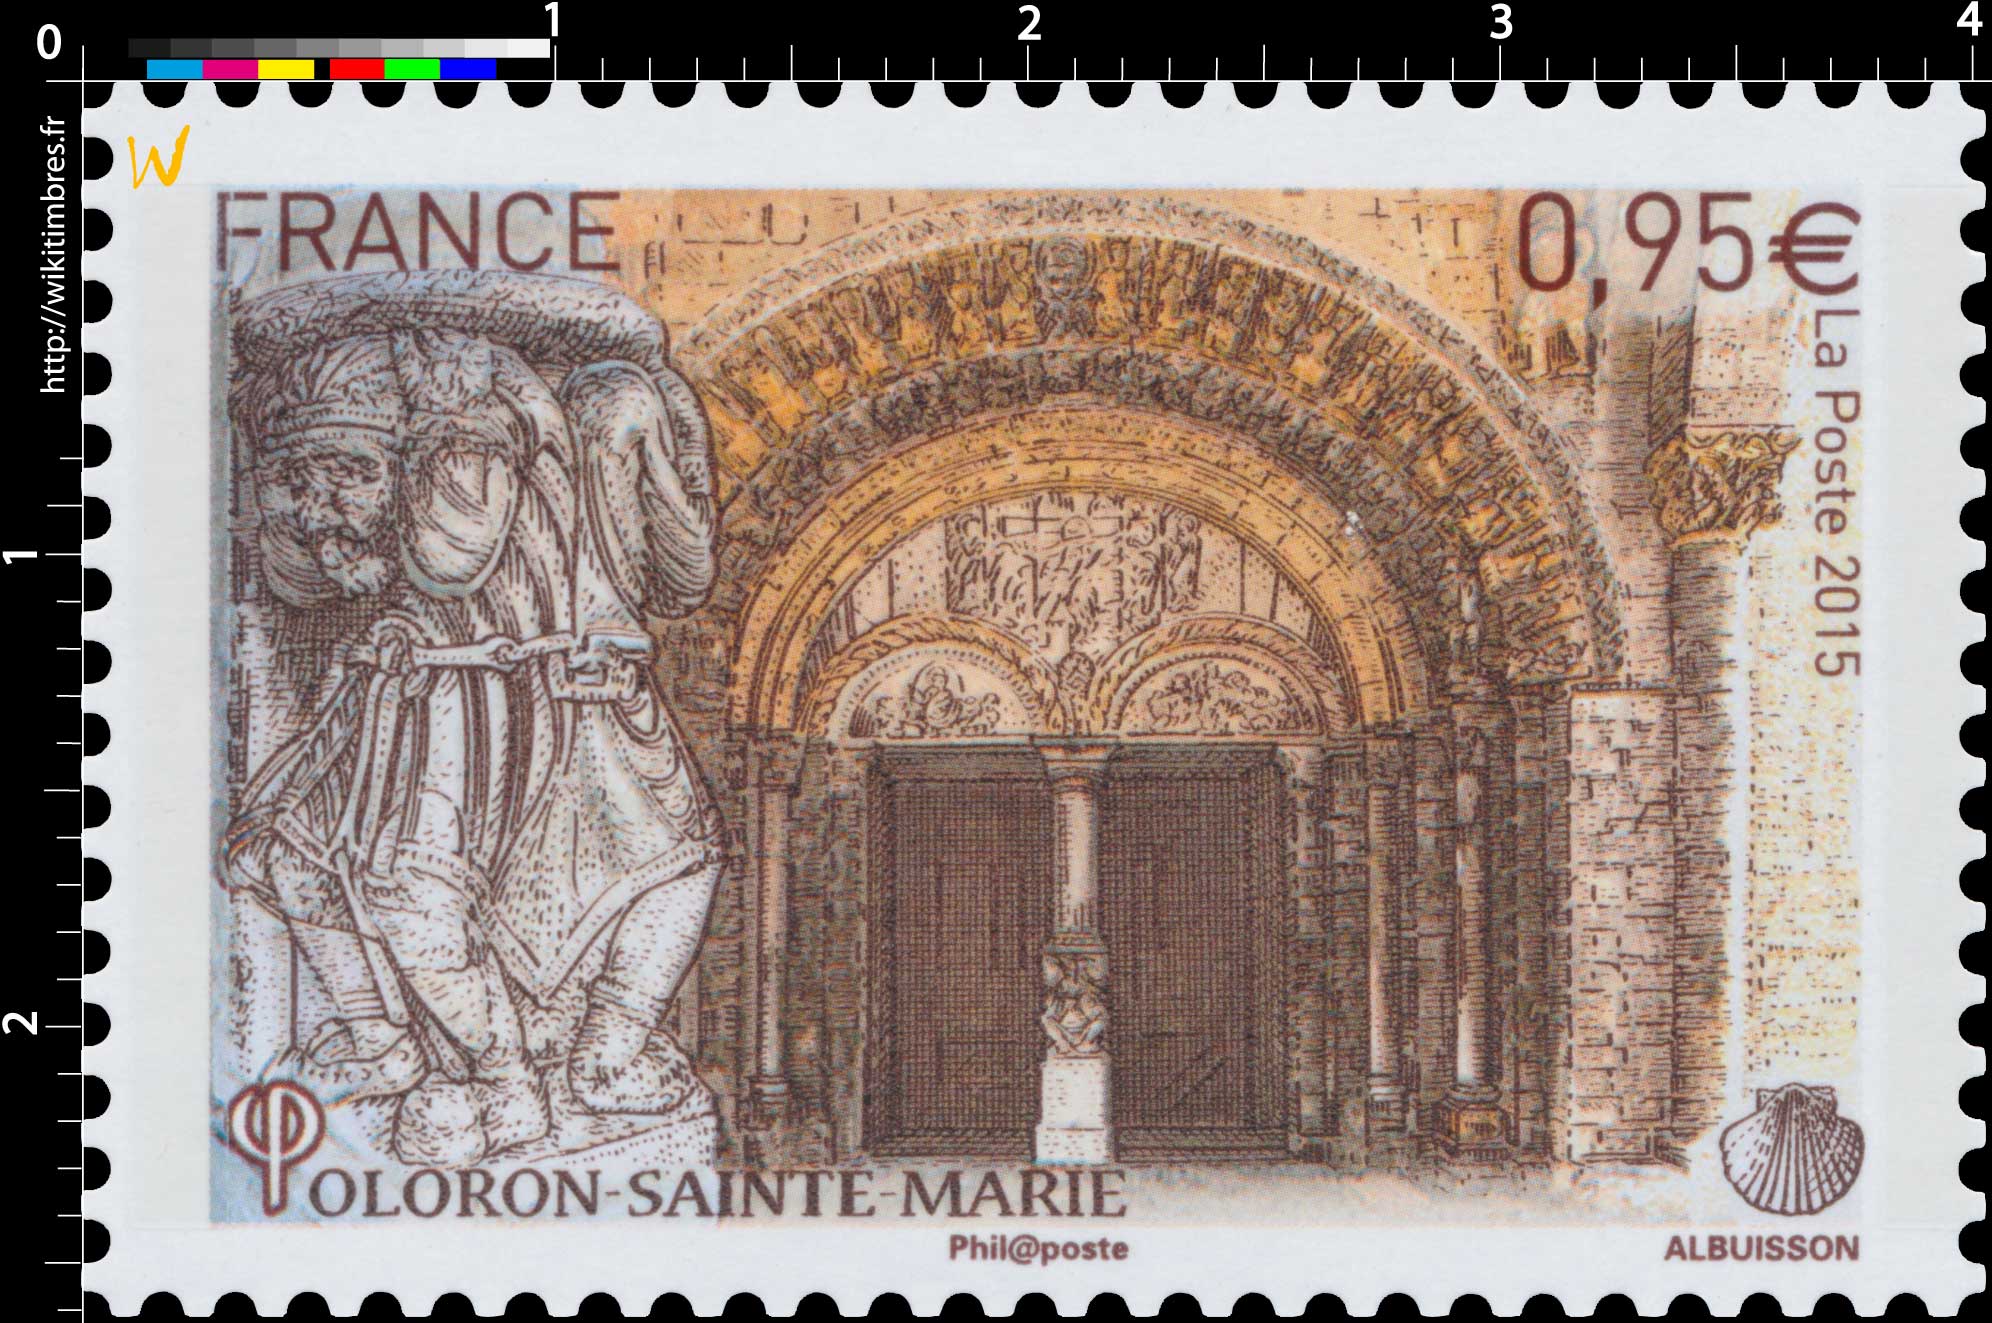 2015 Oloron-Sainte-Marie